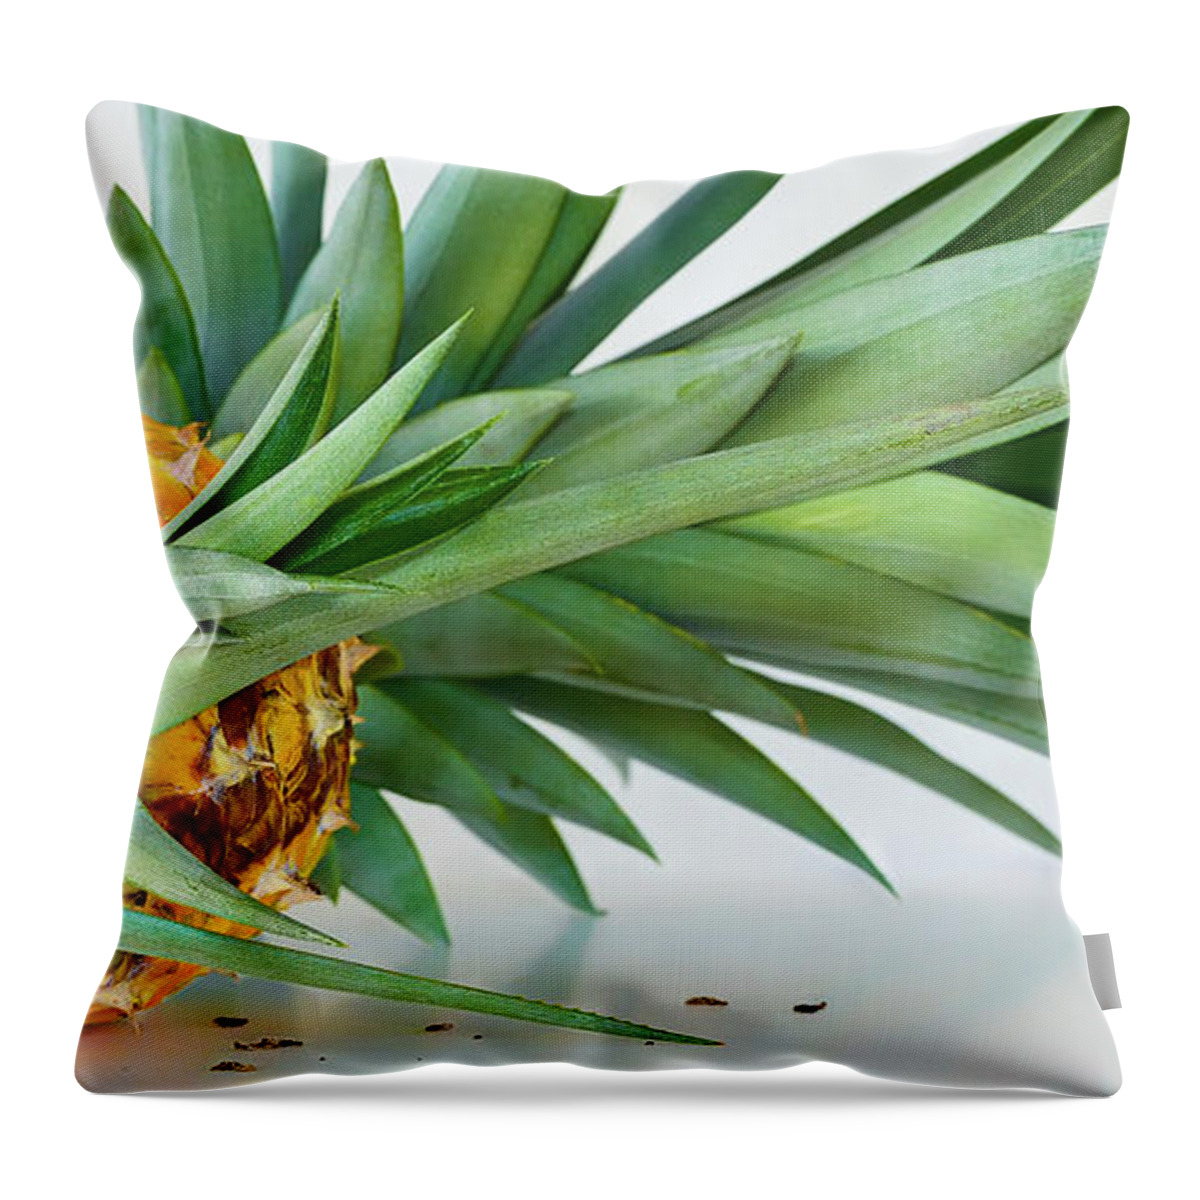 Pineapple Panorama Throw Pillow featuring the photograph Pineapple Panorama by Olga Hamilton